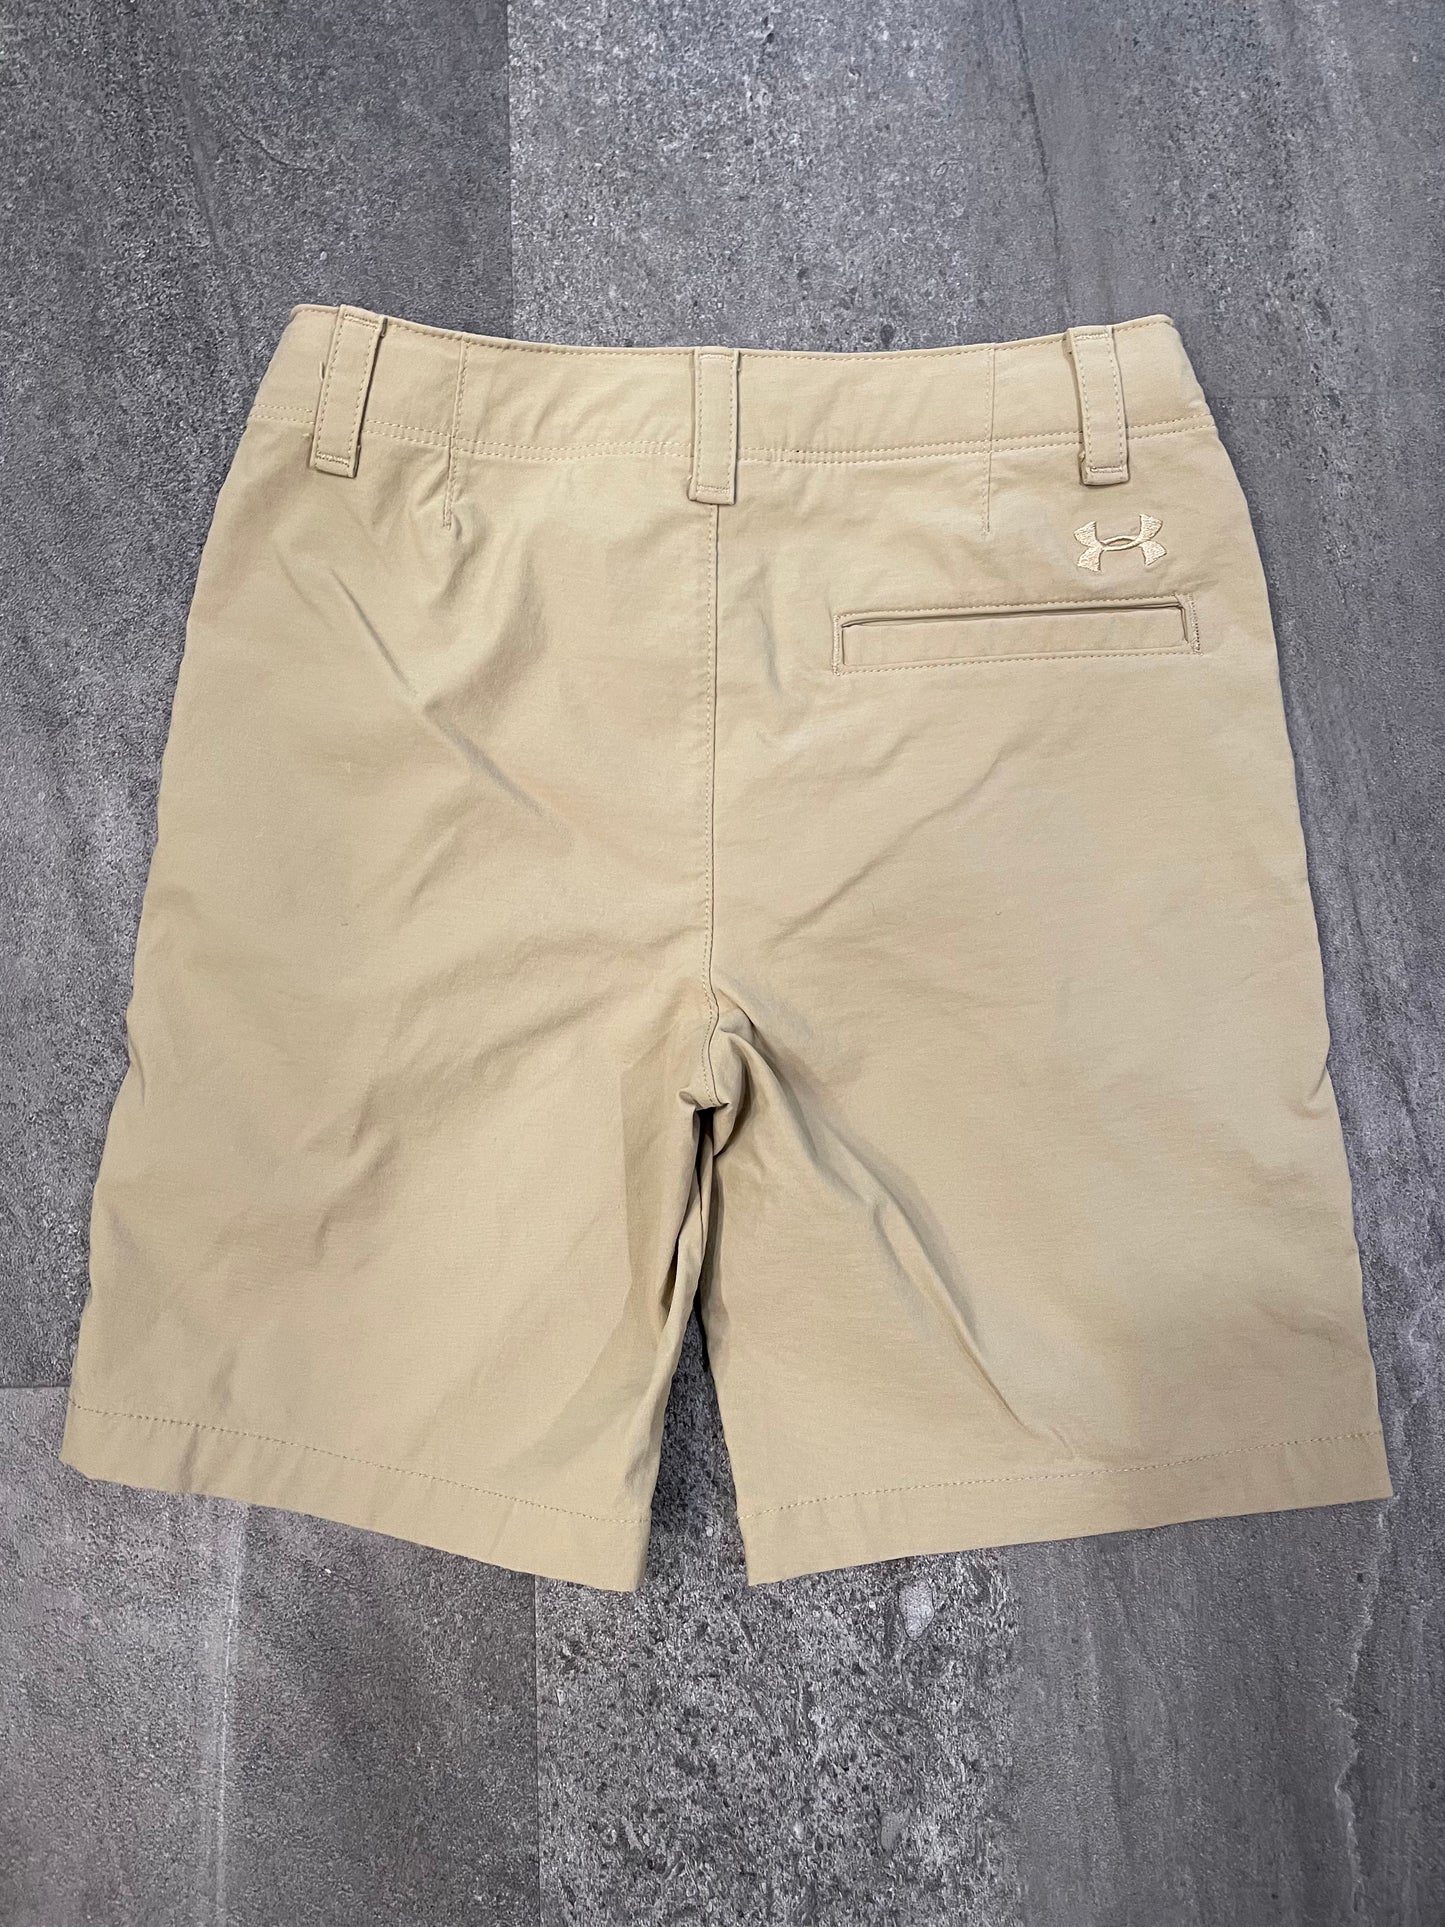 Under Armour Tan Flat Front Boys Shorts (5)